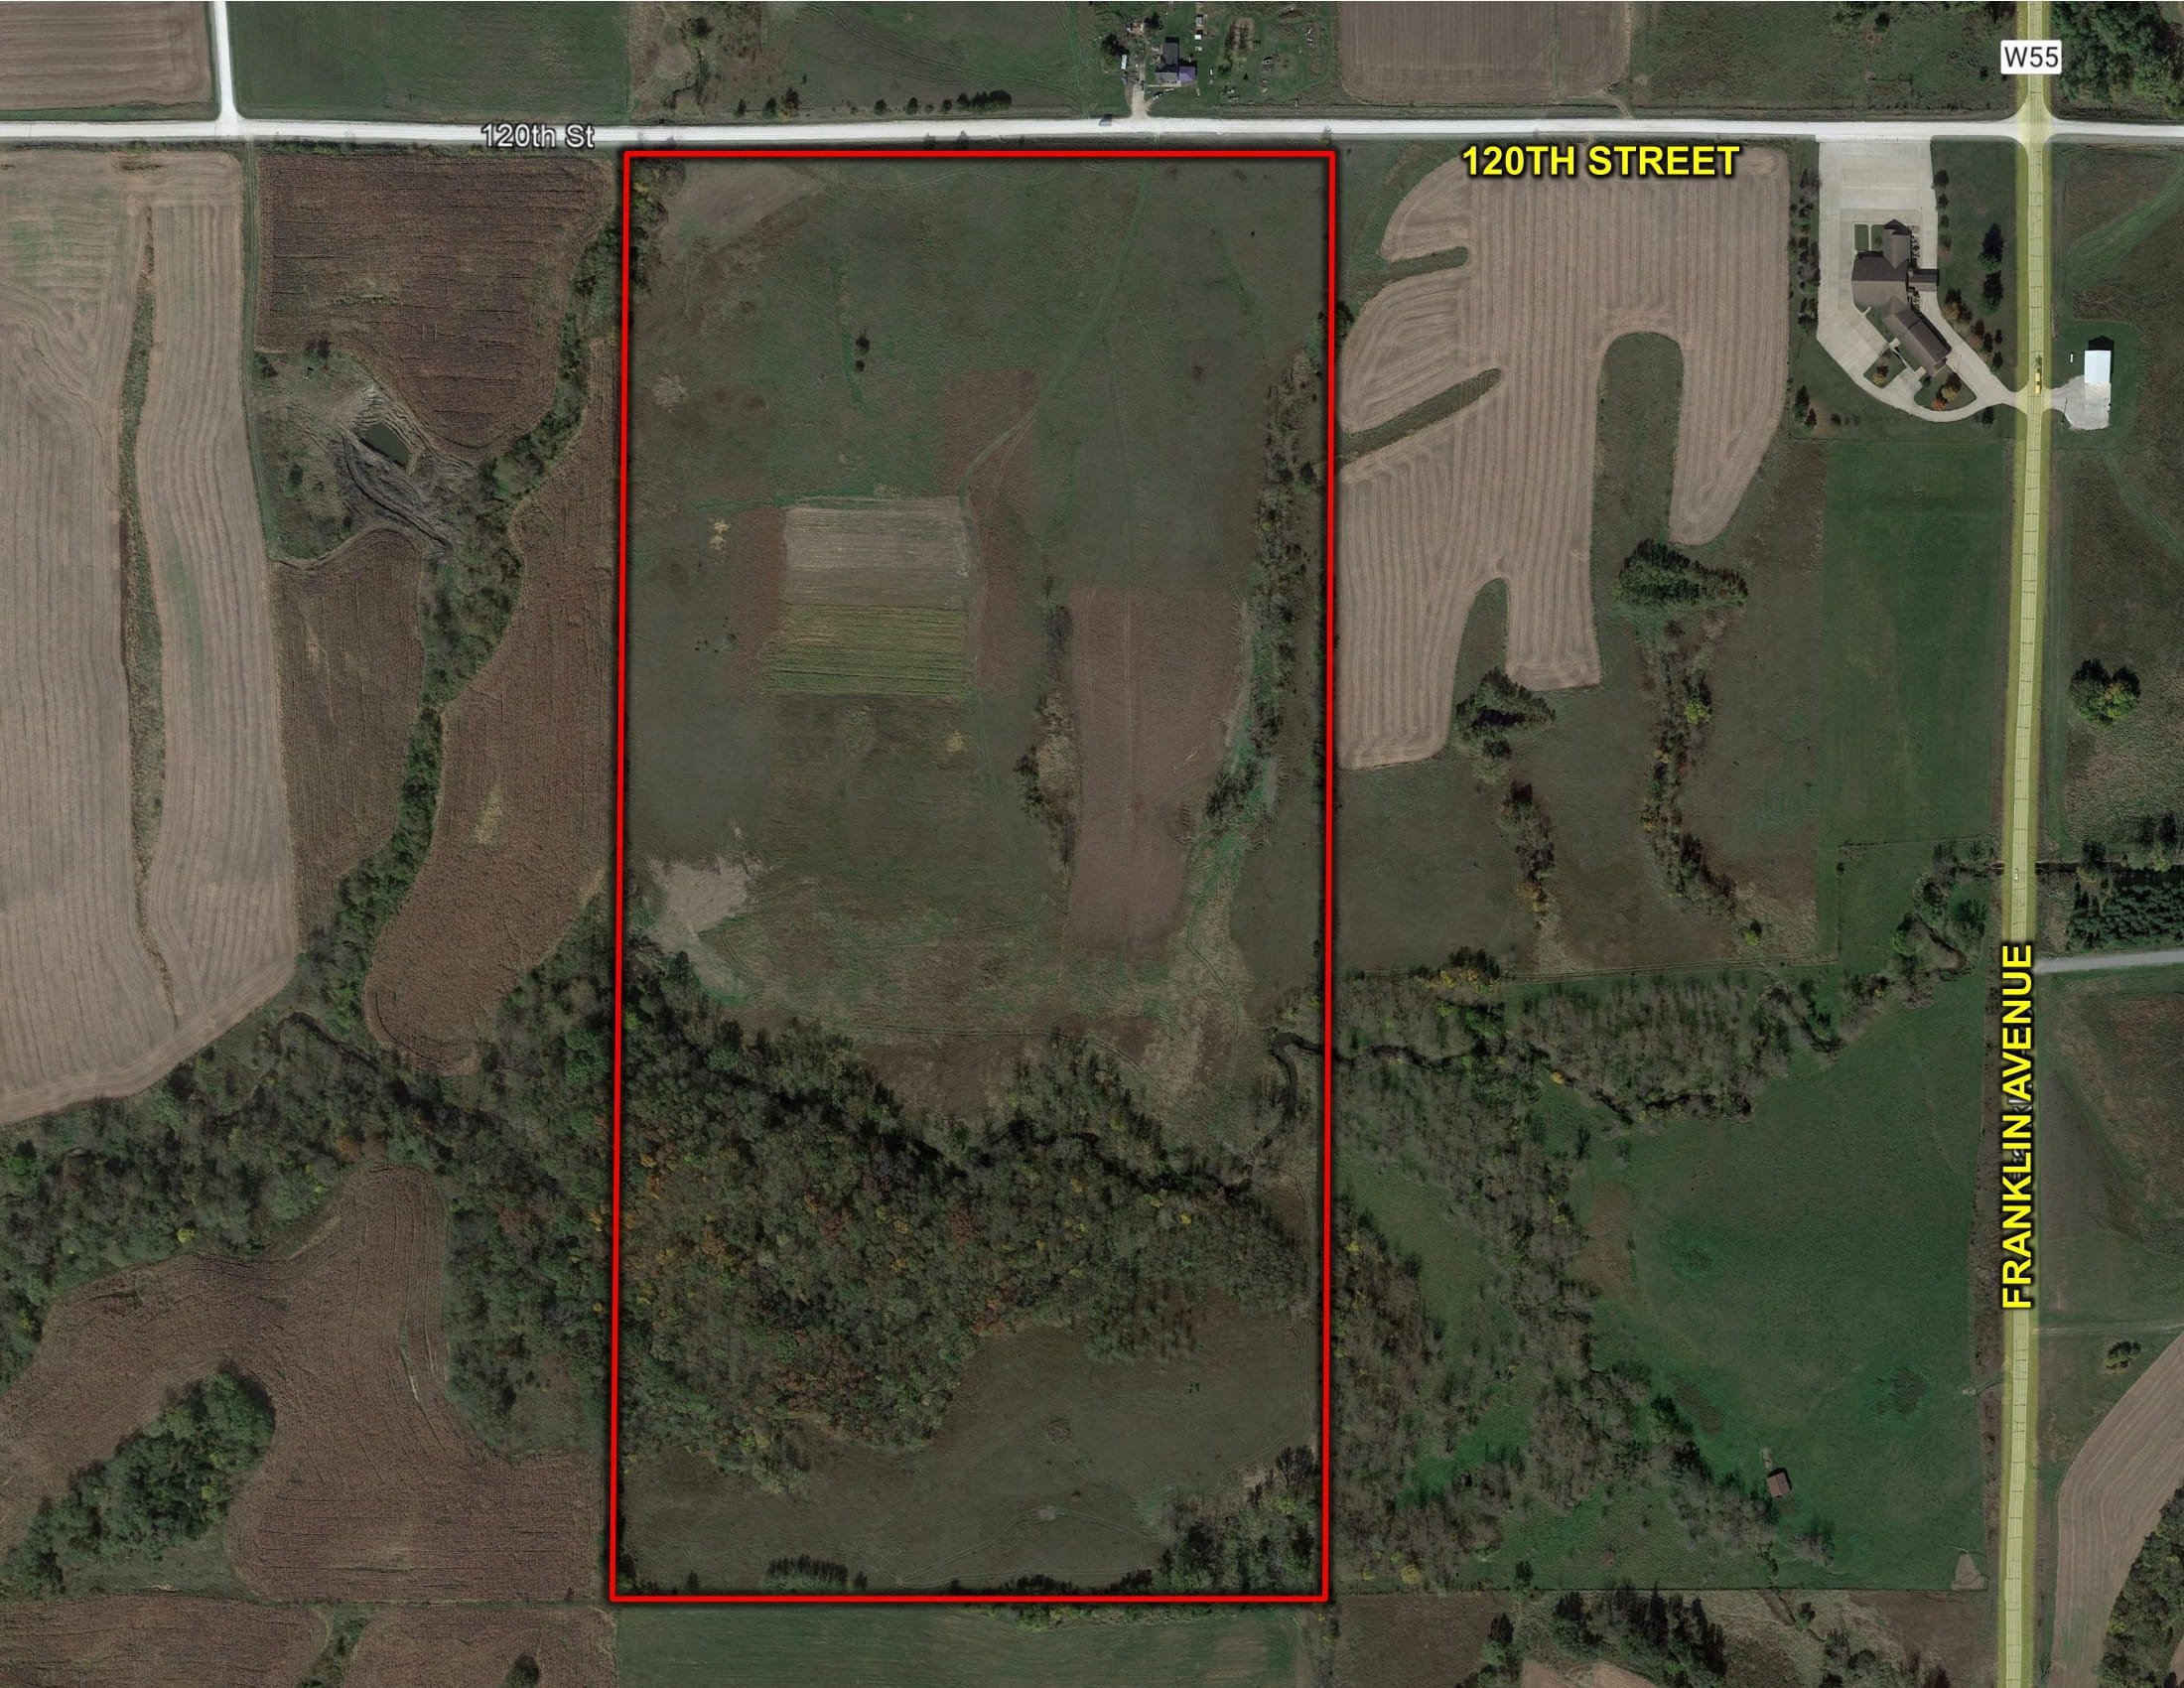 land-henry-county-iowa-80-acres-listing-number-16659-16292-photo-land-henry-county-iowa-80-acres-listing-number-16292-maps-01-6jpg (1)-0.jpg